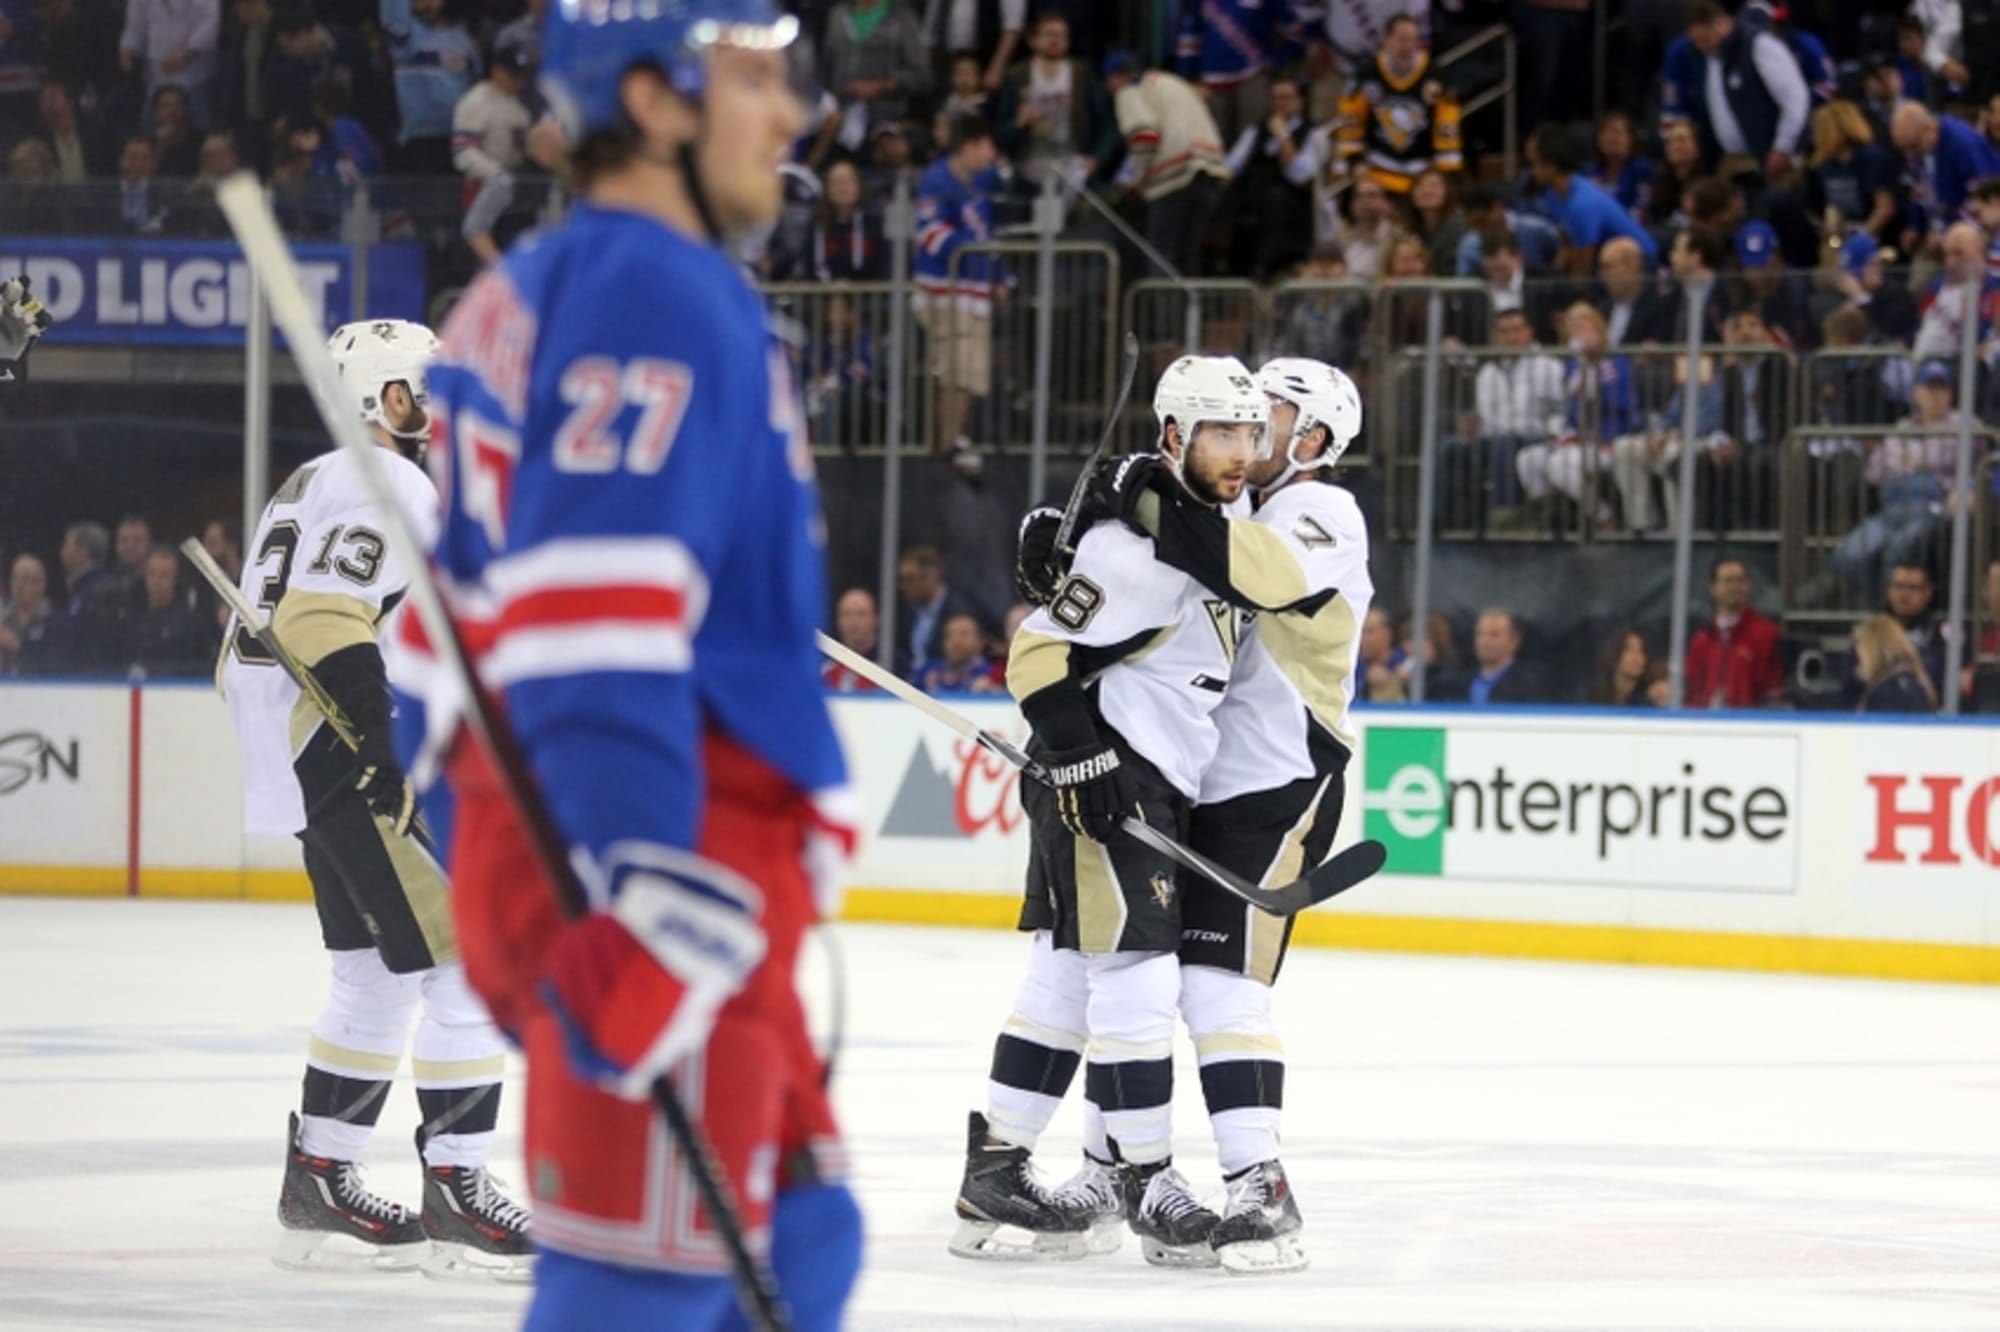 Penguins vs. Rangers Full Highlights, final score and more